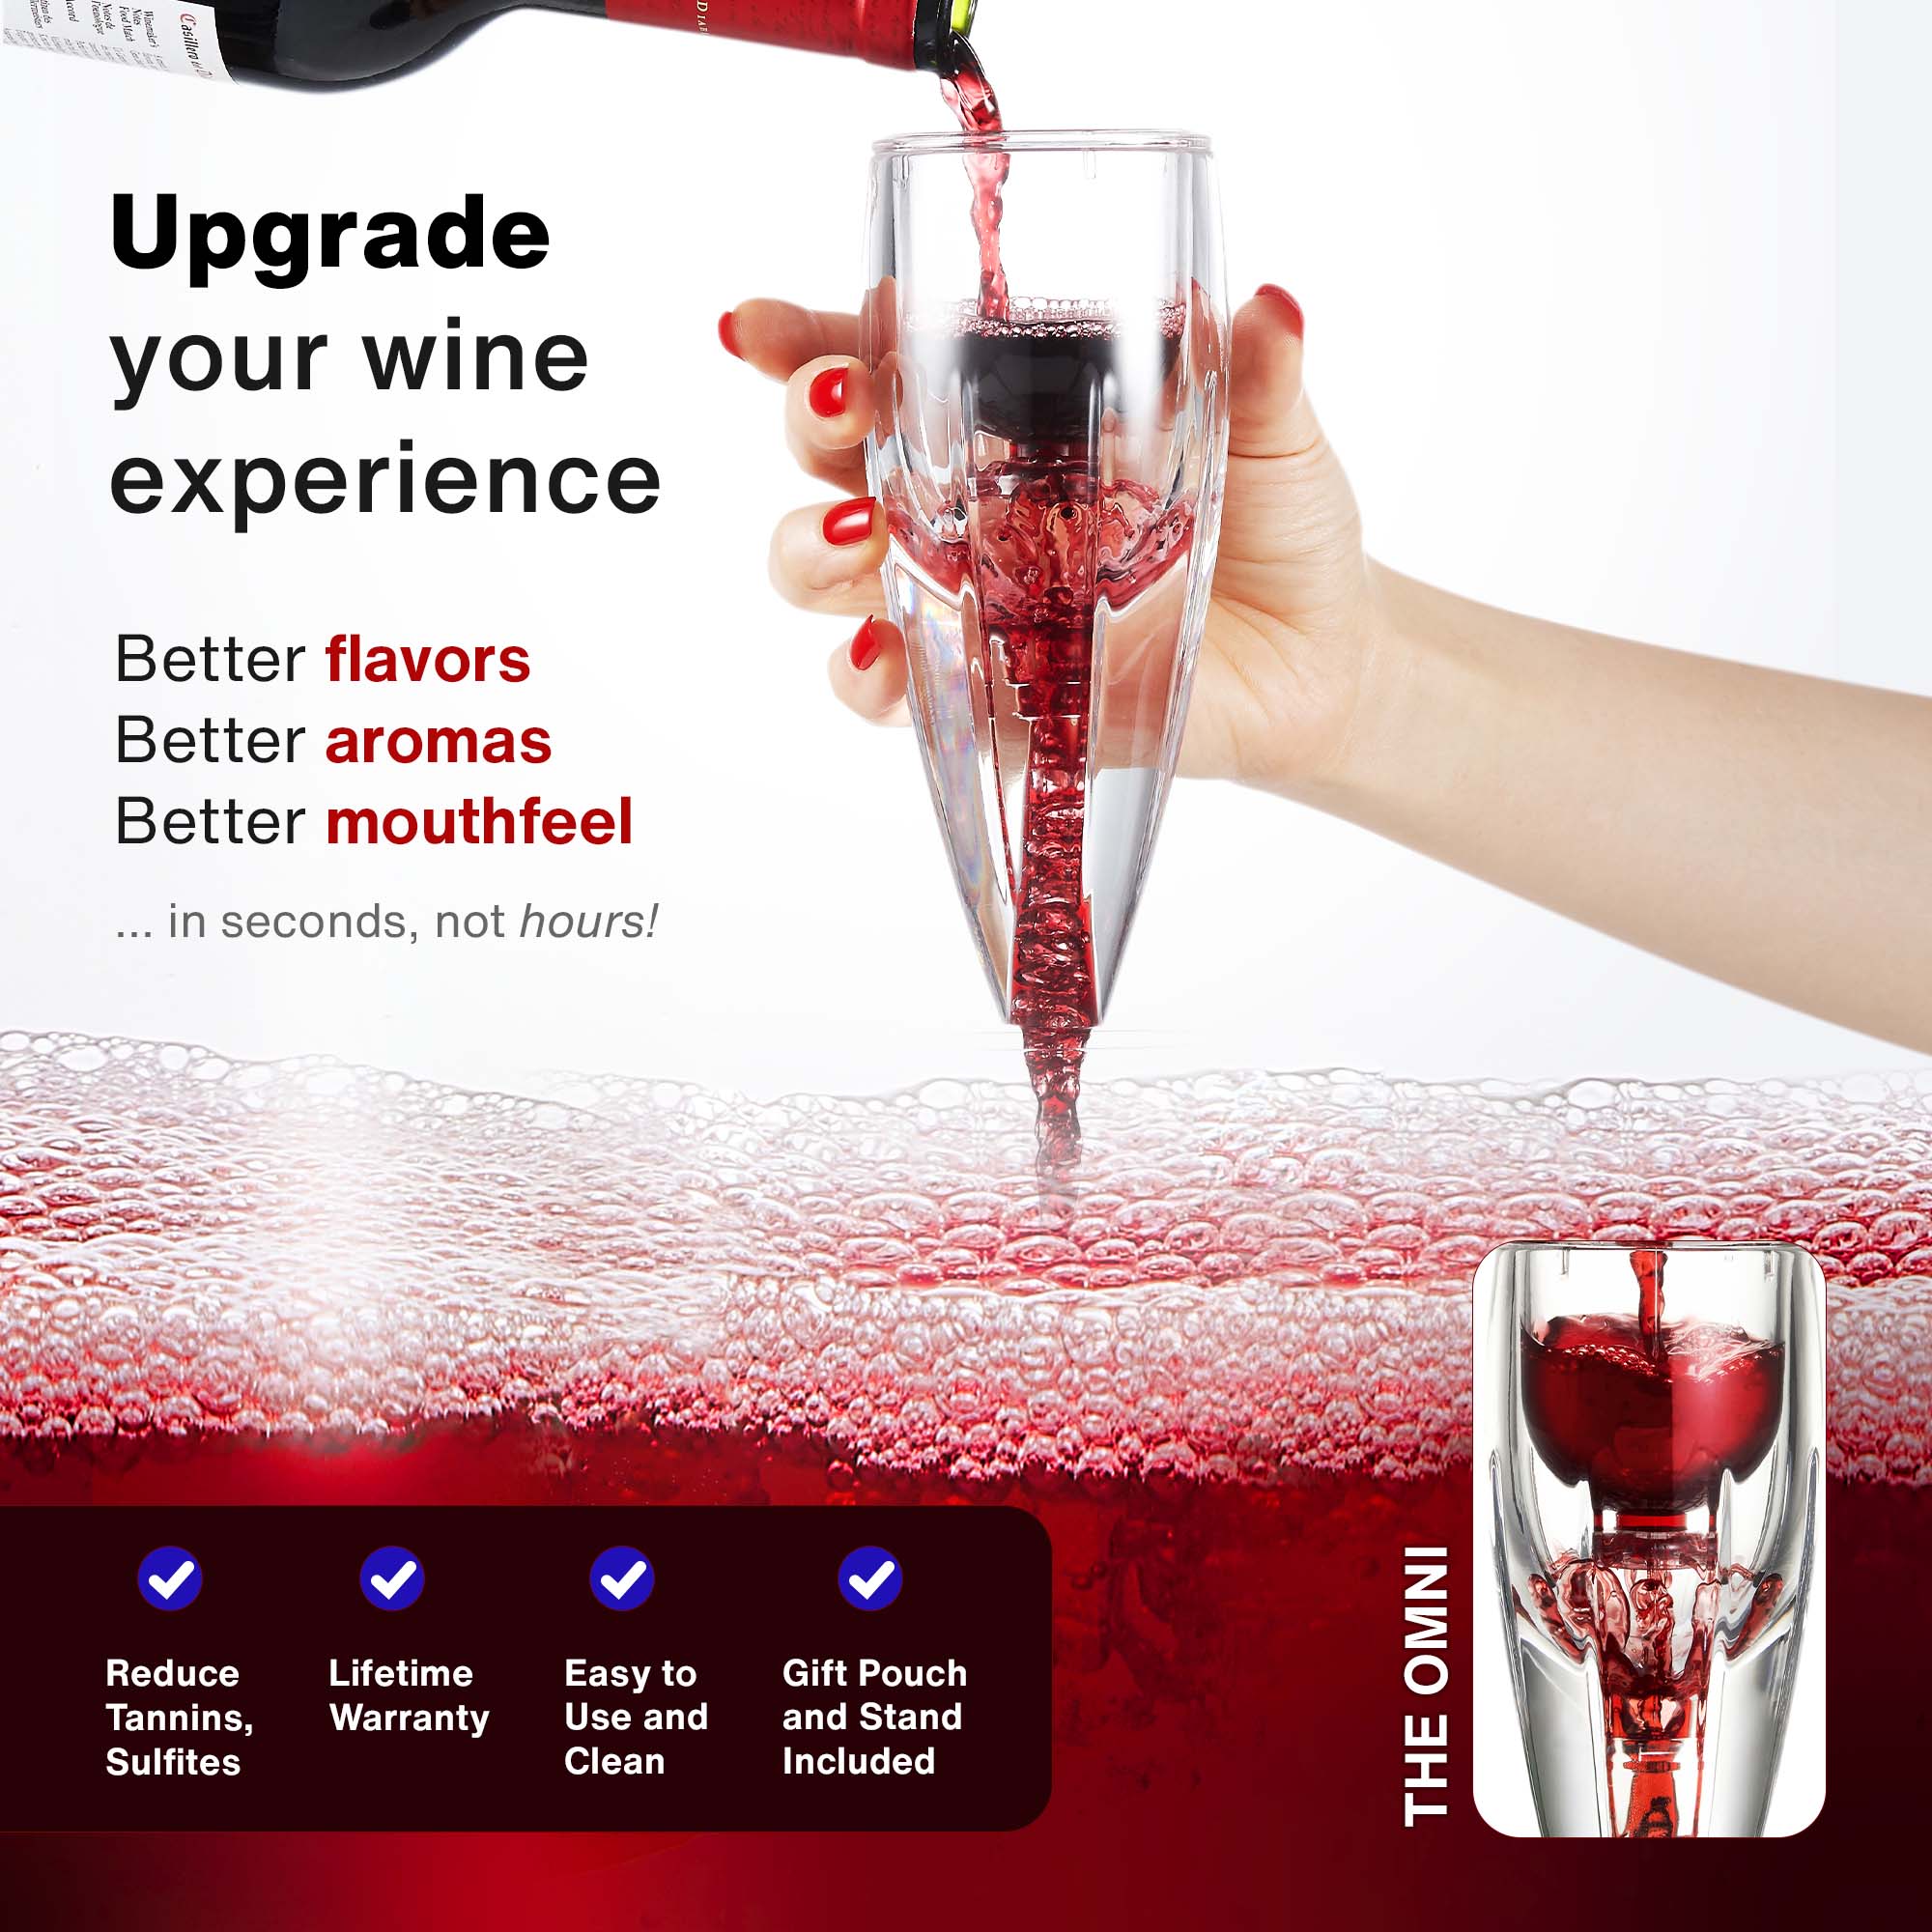 Vac-U-Vin Special Edition Wine Essentials Giftset, Standard, Black